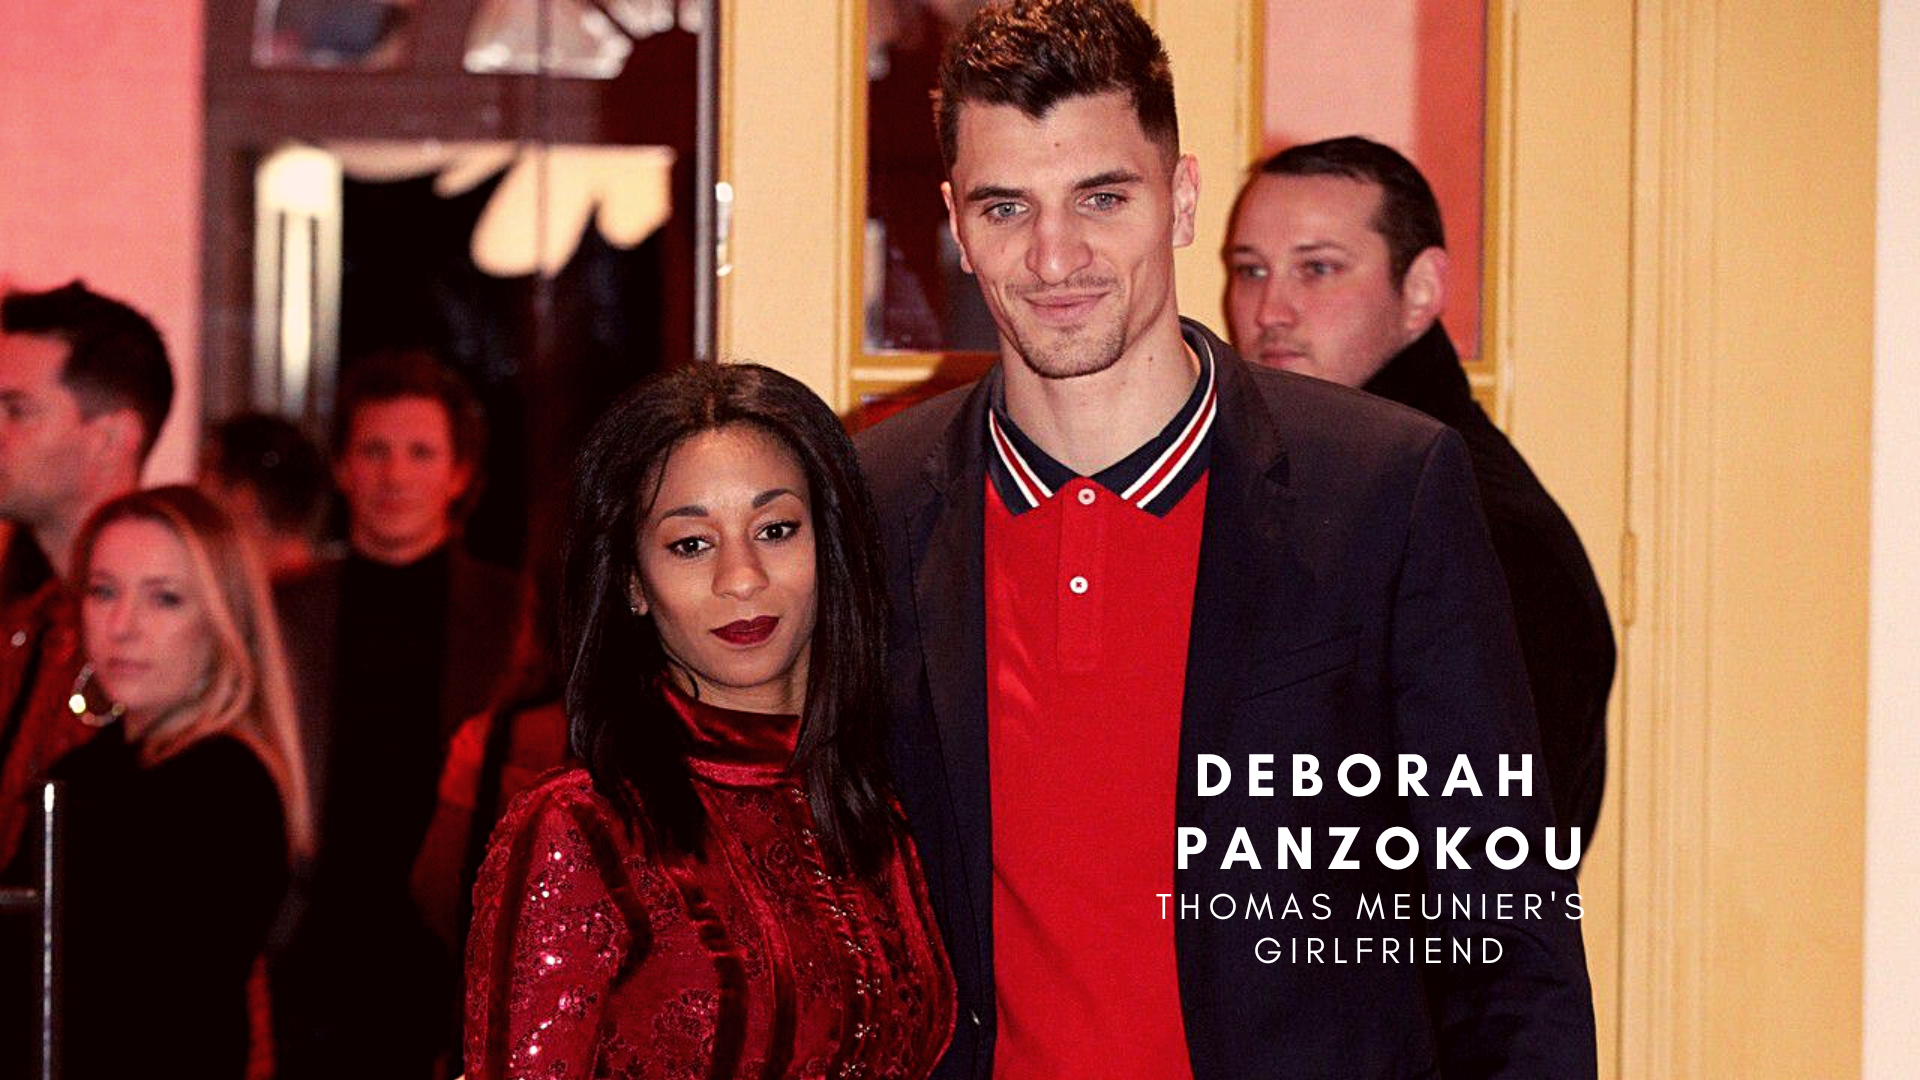 Thomas Meunier with his girlfriend Deborah Panzokou. (Credit: Le Perisien)